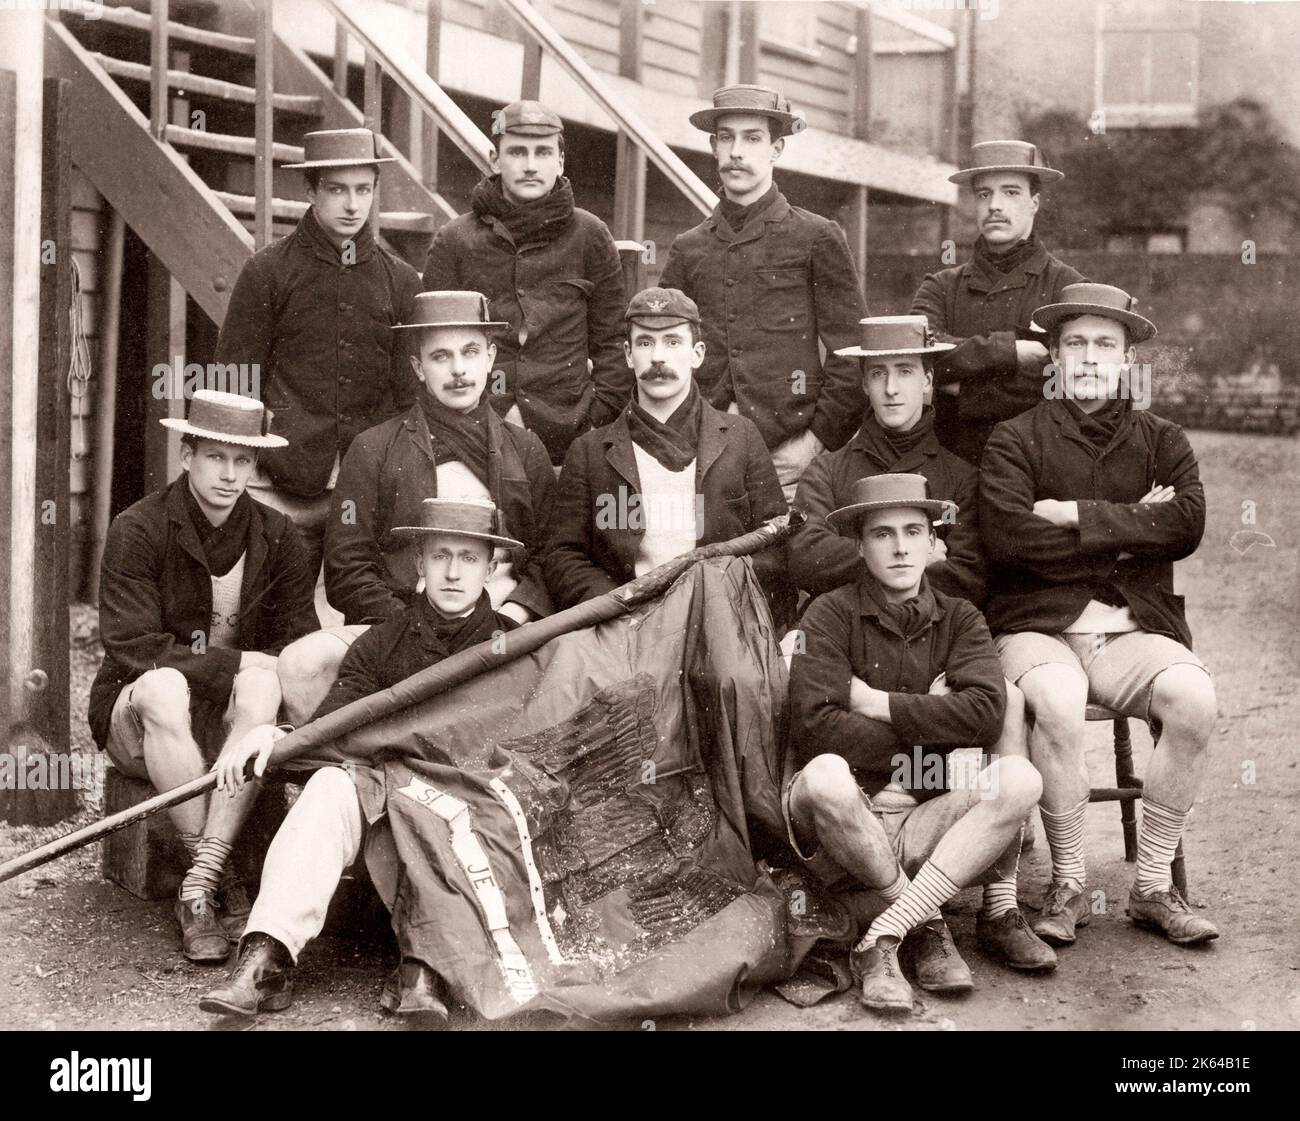 19th century vintage photograph - Lady Margaret Boat Club, Cambridge, rowing team, 1890s Stock Photo